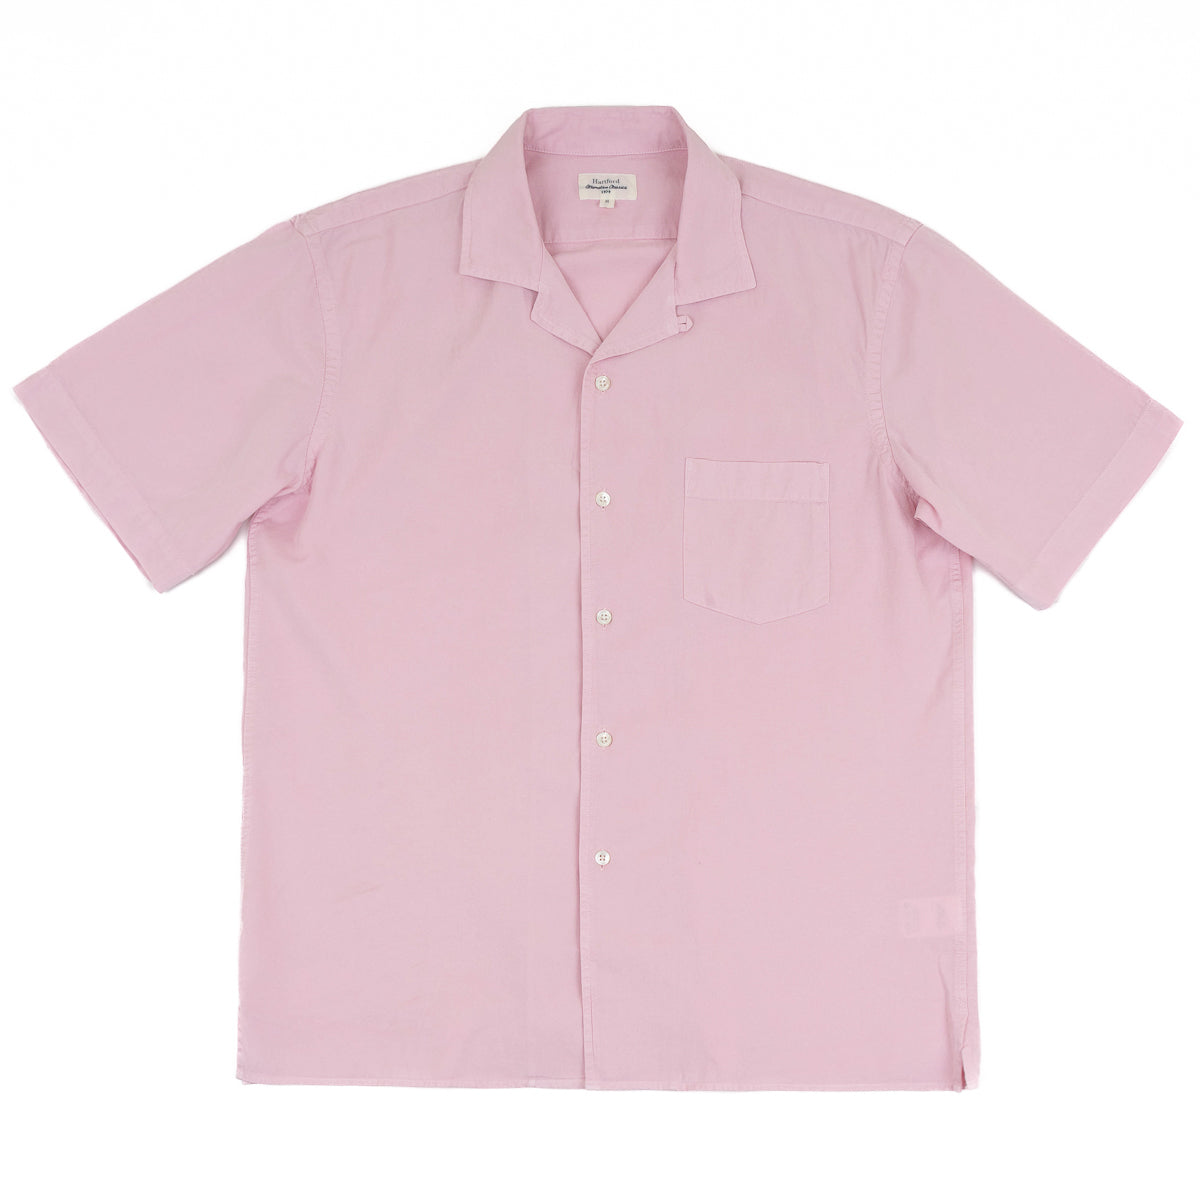 Palm Pat Shirt 04005 - Faded Rose (#86)